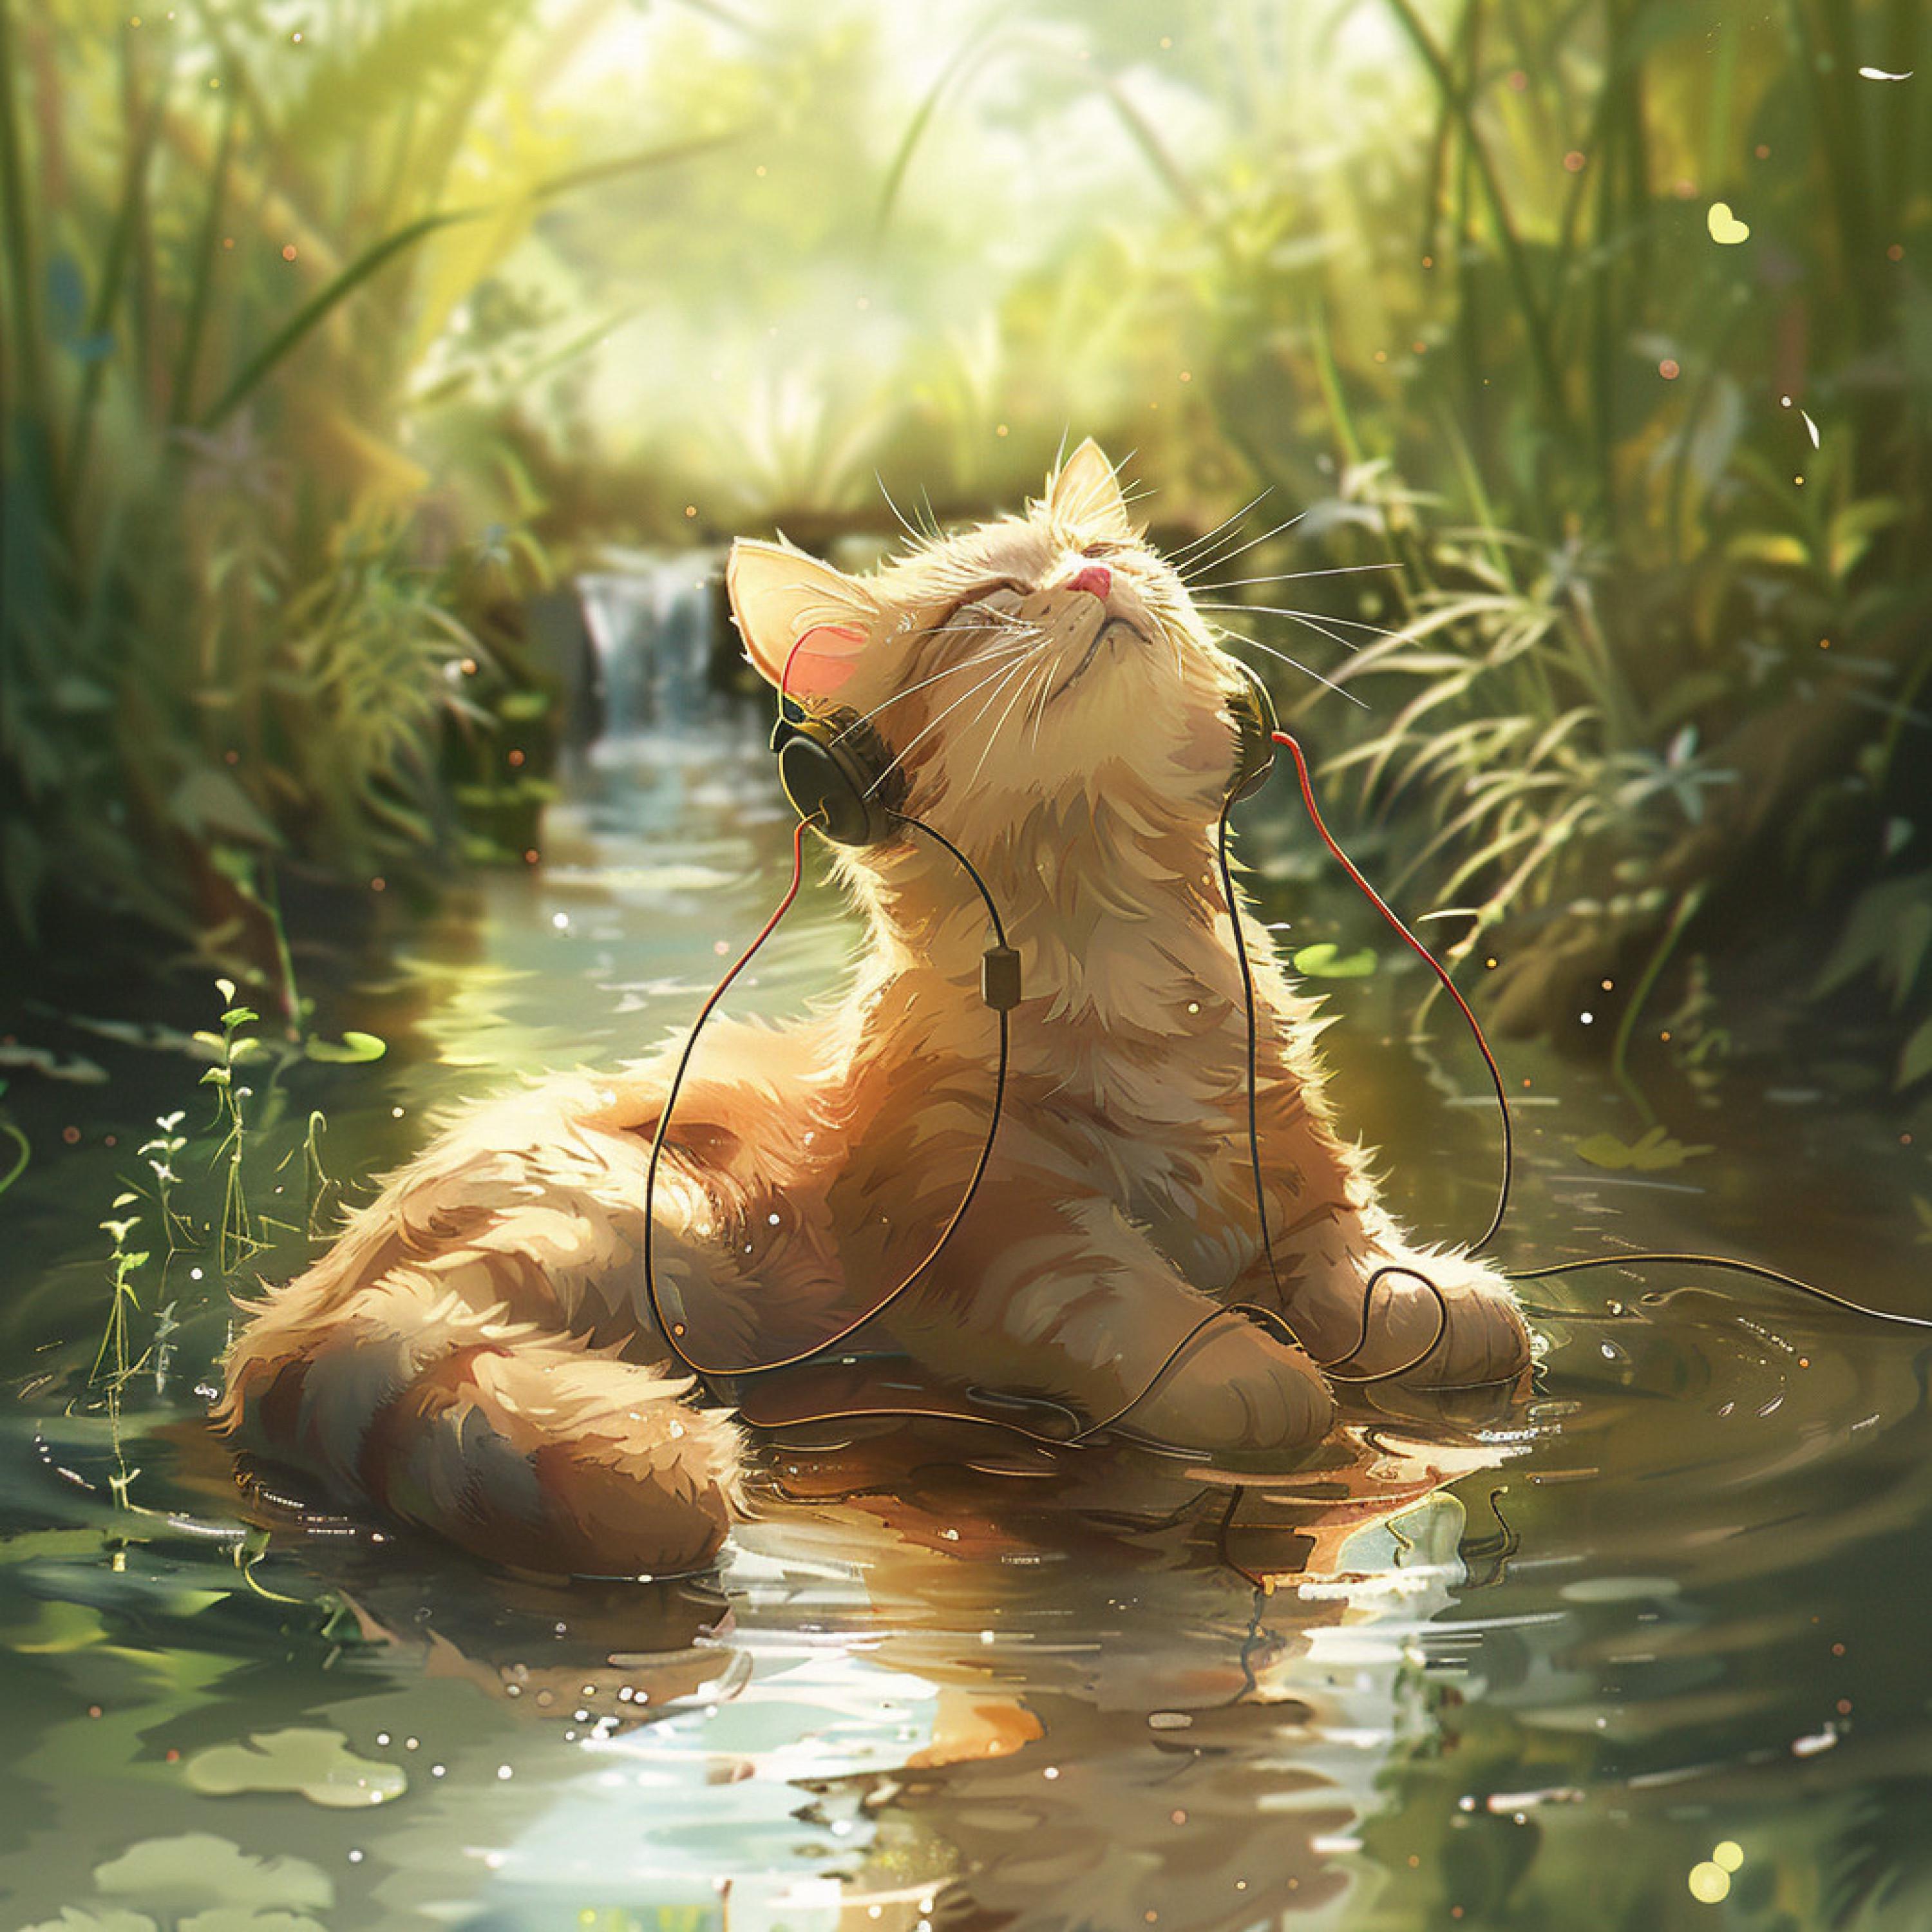 Kitten Music - Stream's Calming Purr